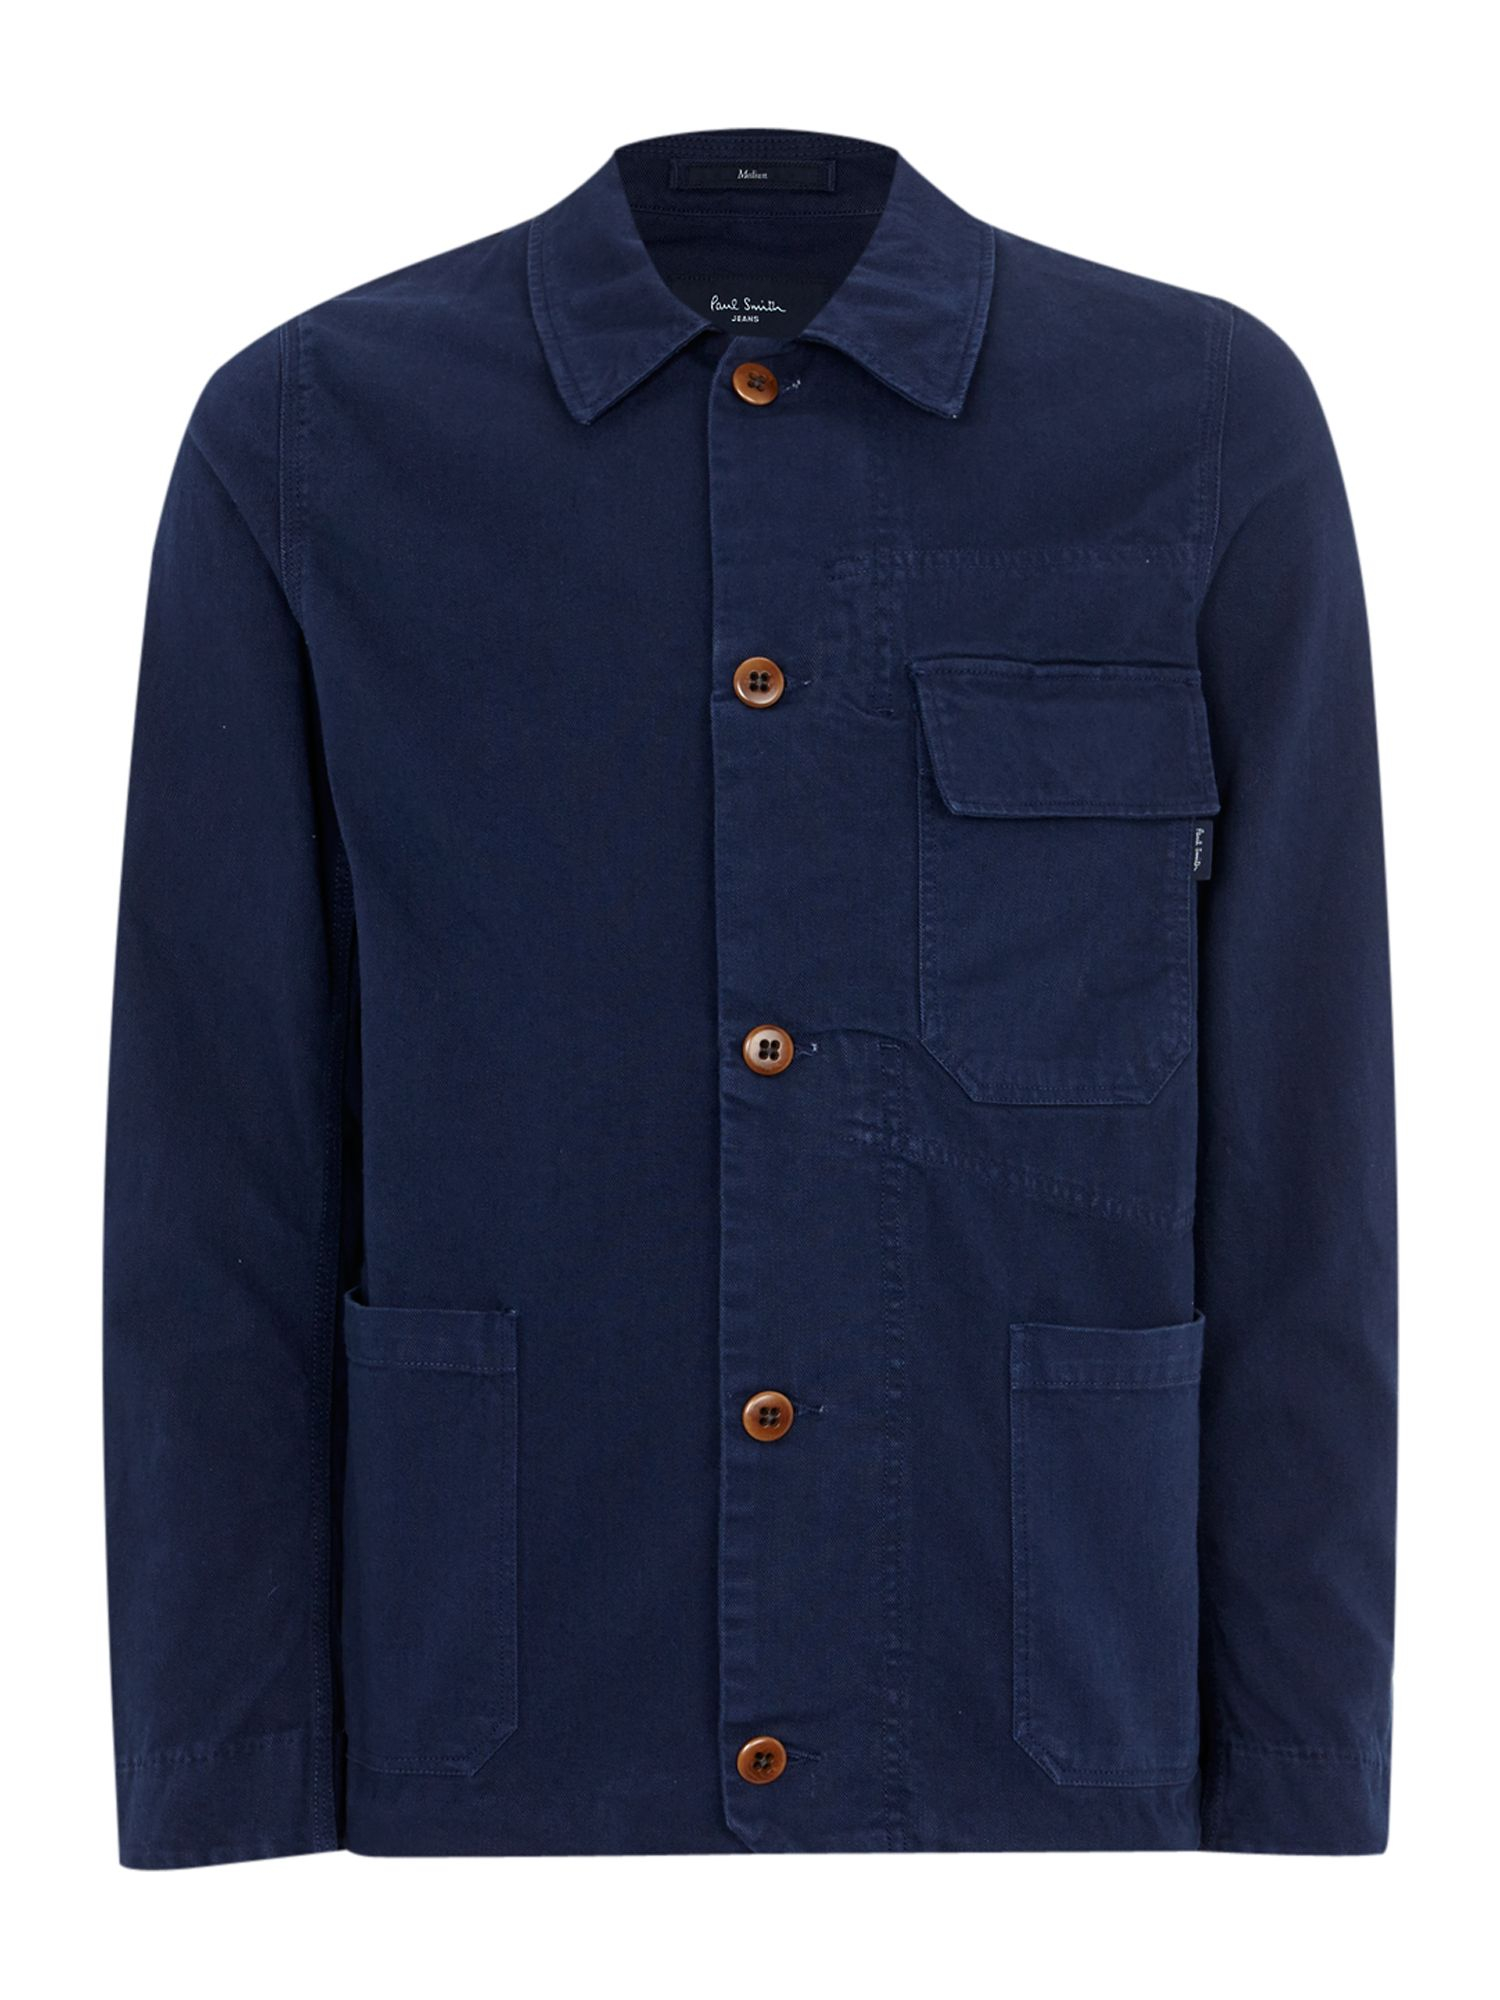 Paul smith Utility Jacket in Blue for Men | Lyst